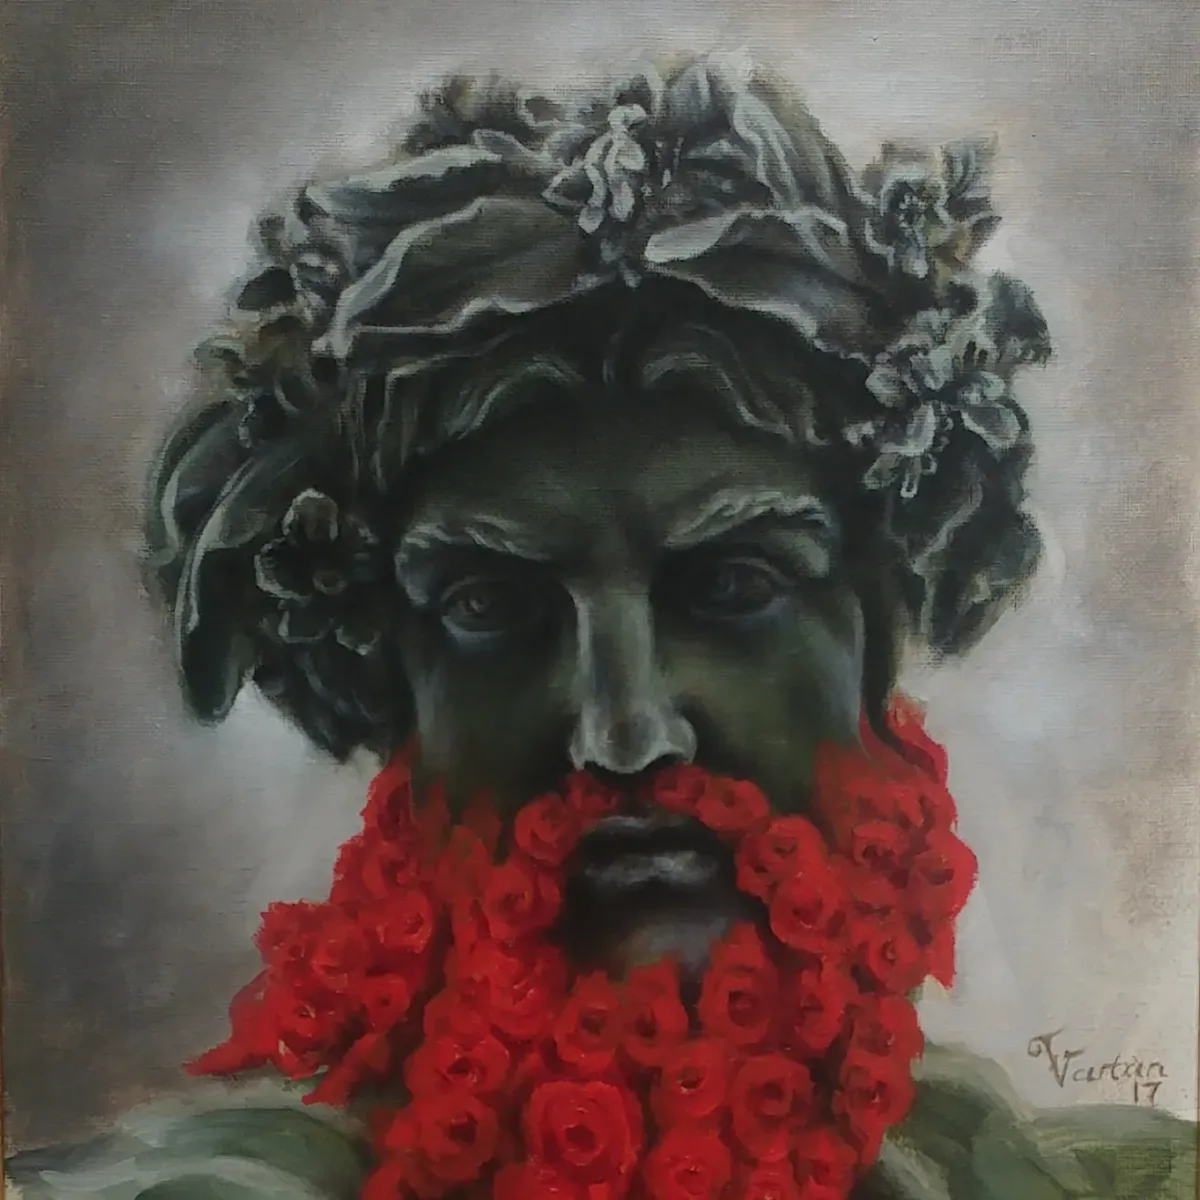 Painting of contemporary artist Vartan Ghazarian - Zeus. For sale.